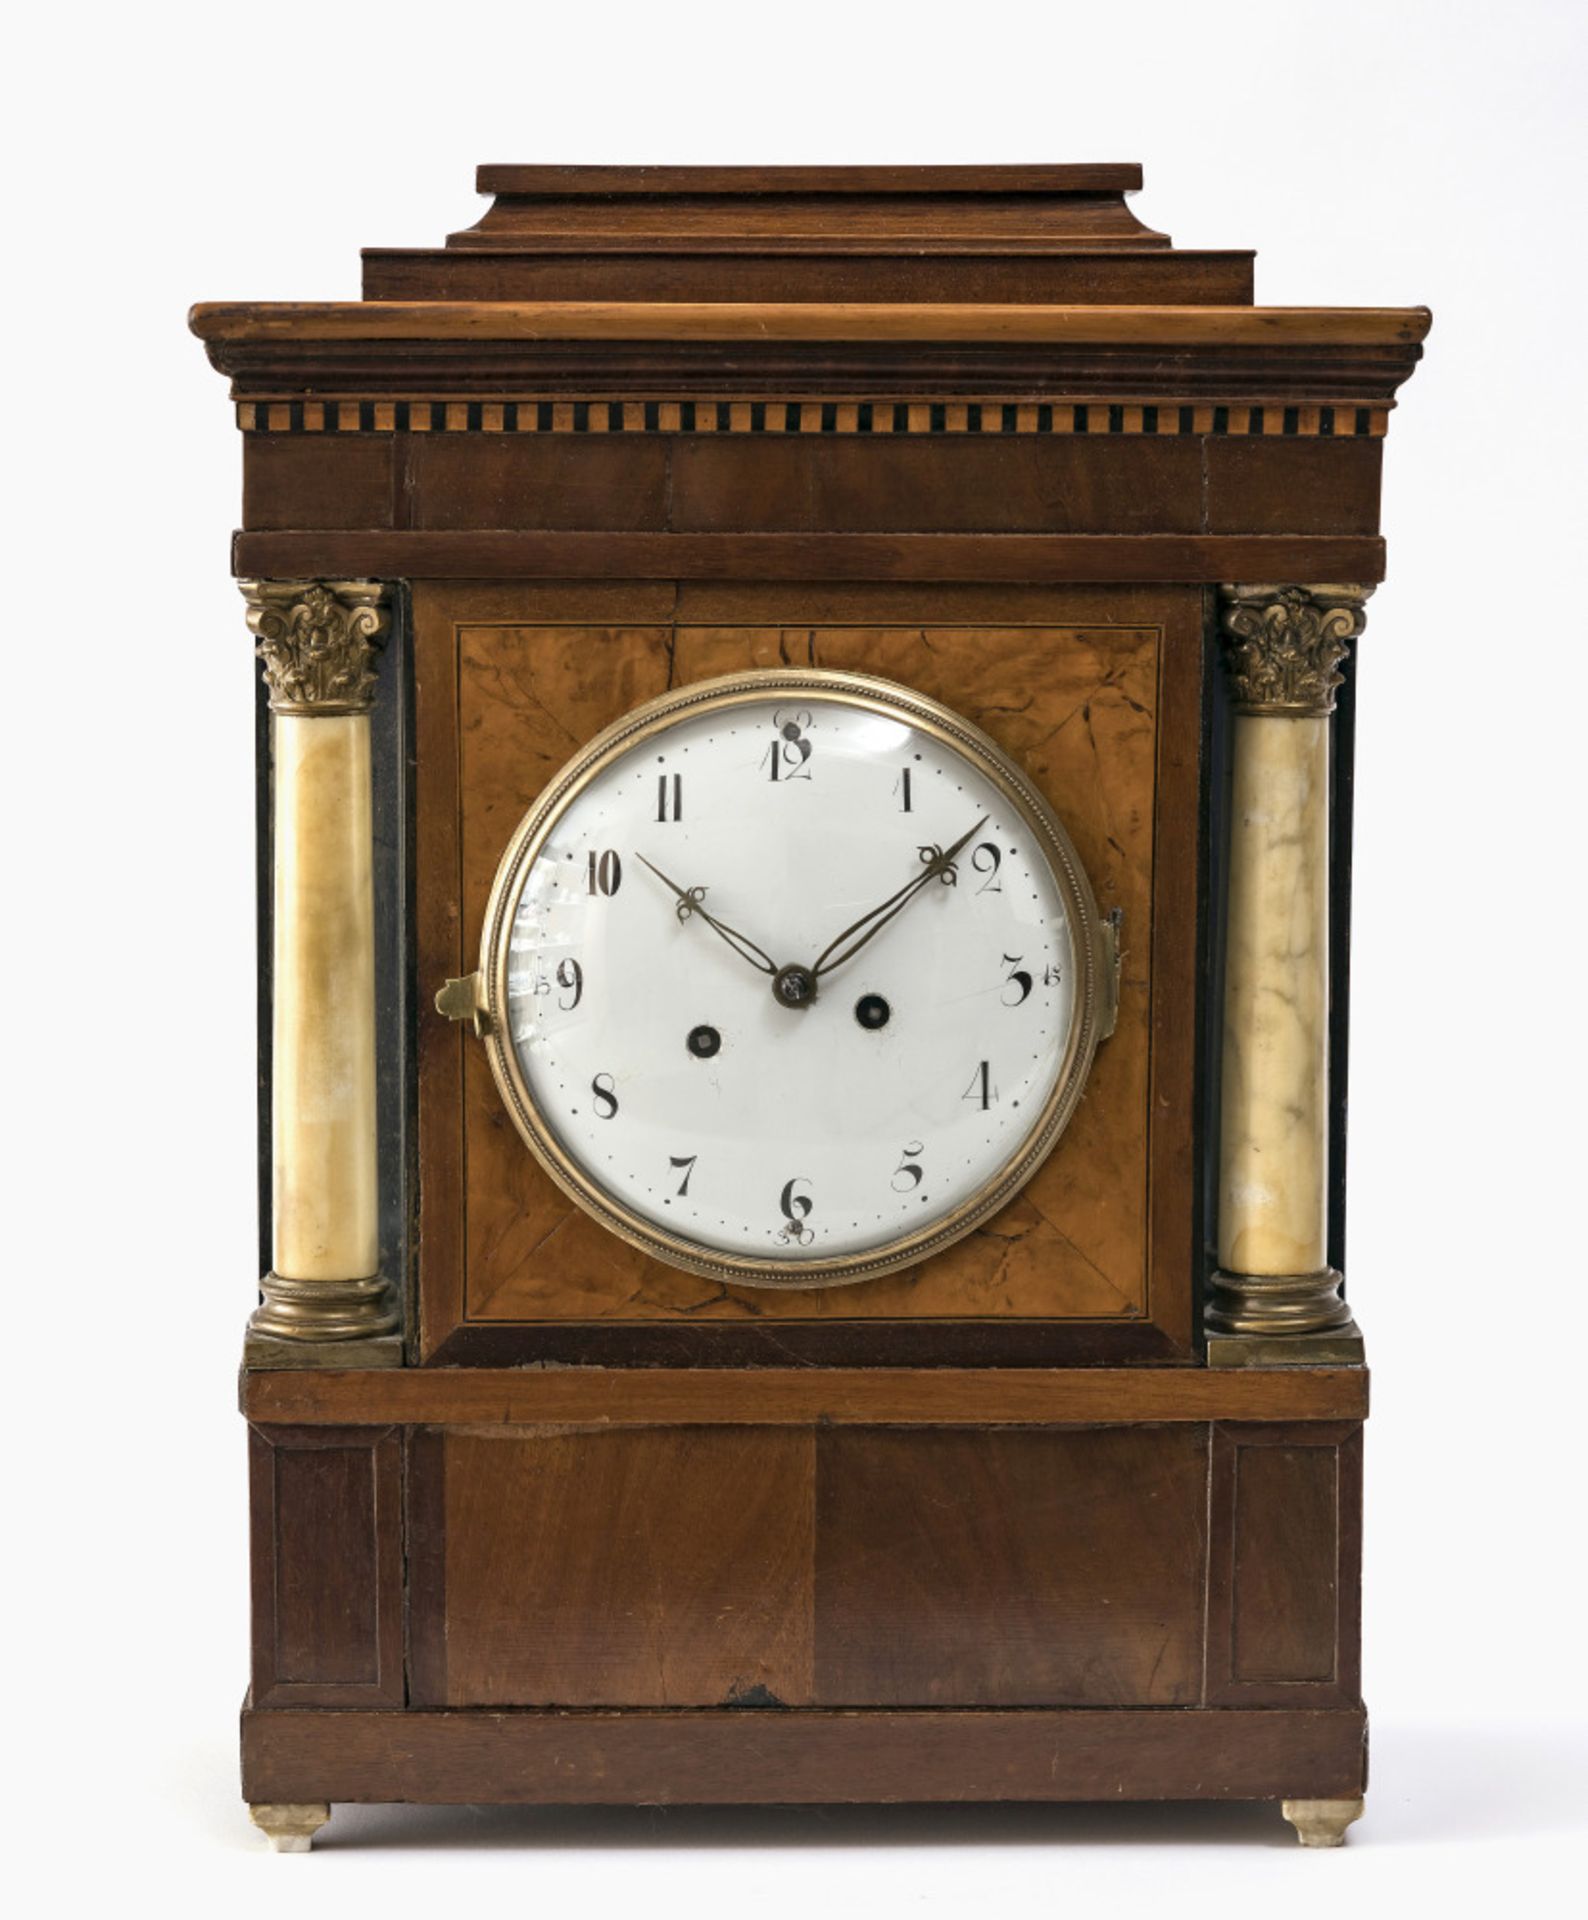 A bracket clock - German, 19th century 